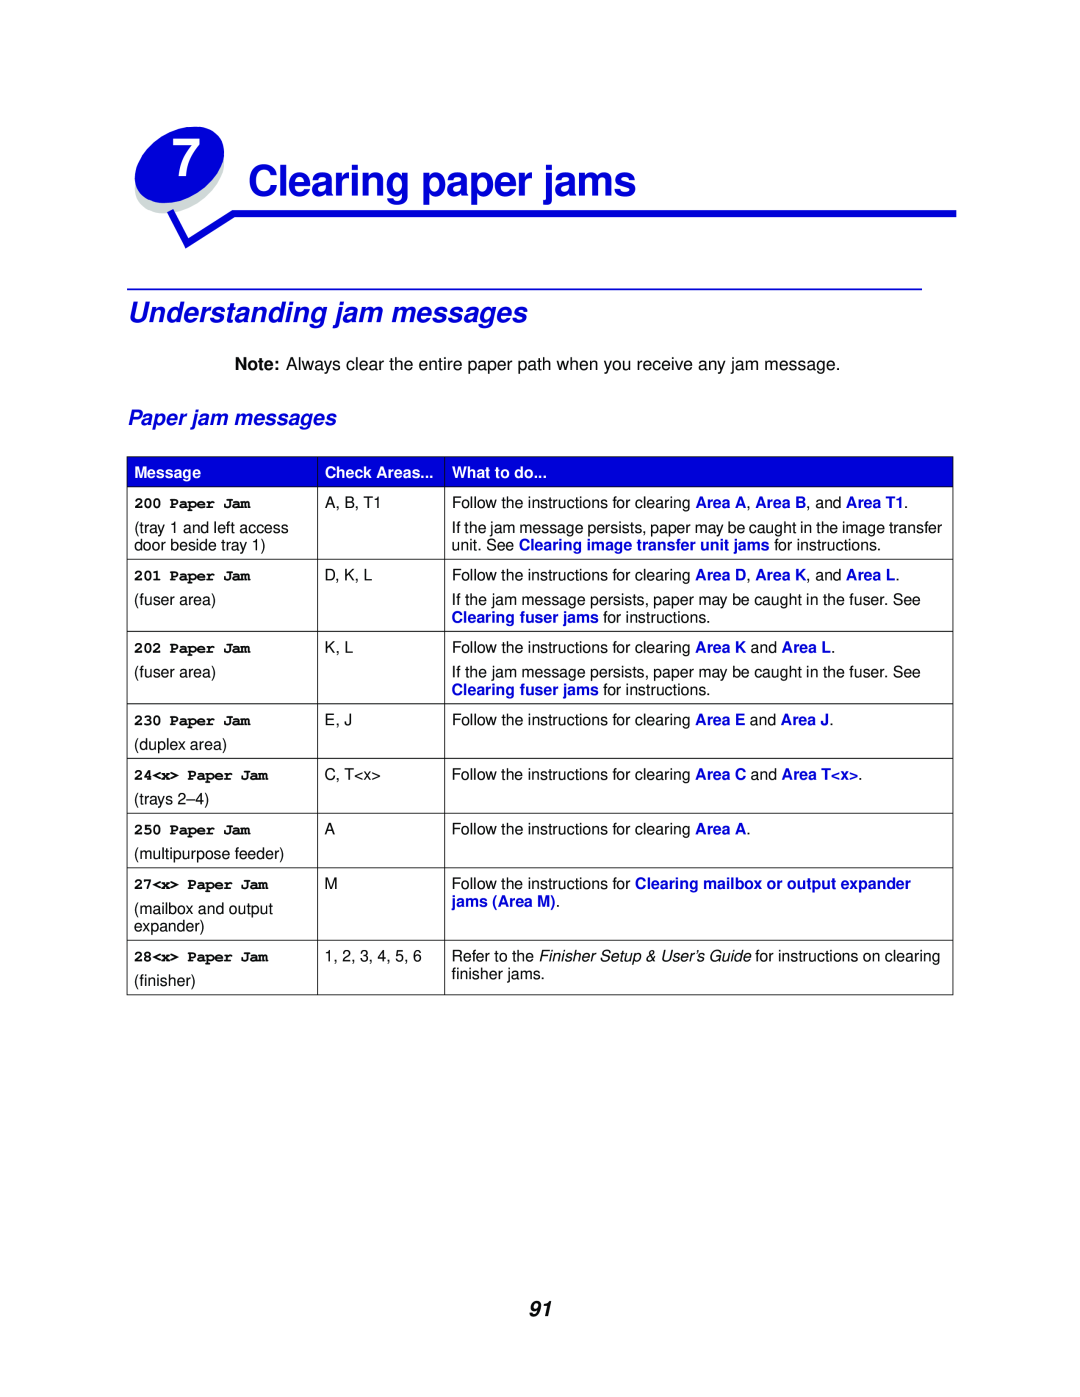 Lexmark 762 Clearing paper jams, Understanding jam messages, Paper jam messages, Clearing fuser jams for instructions 